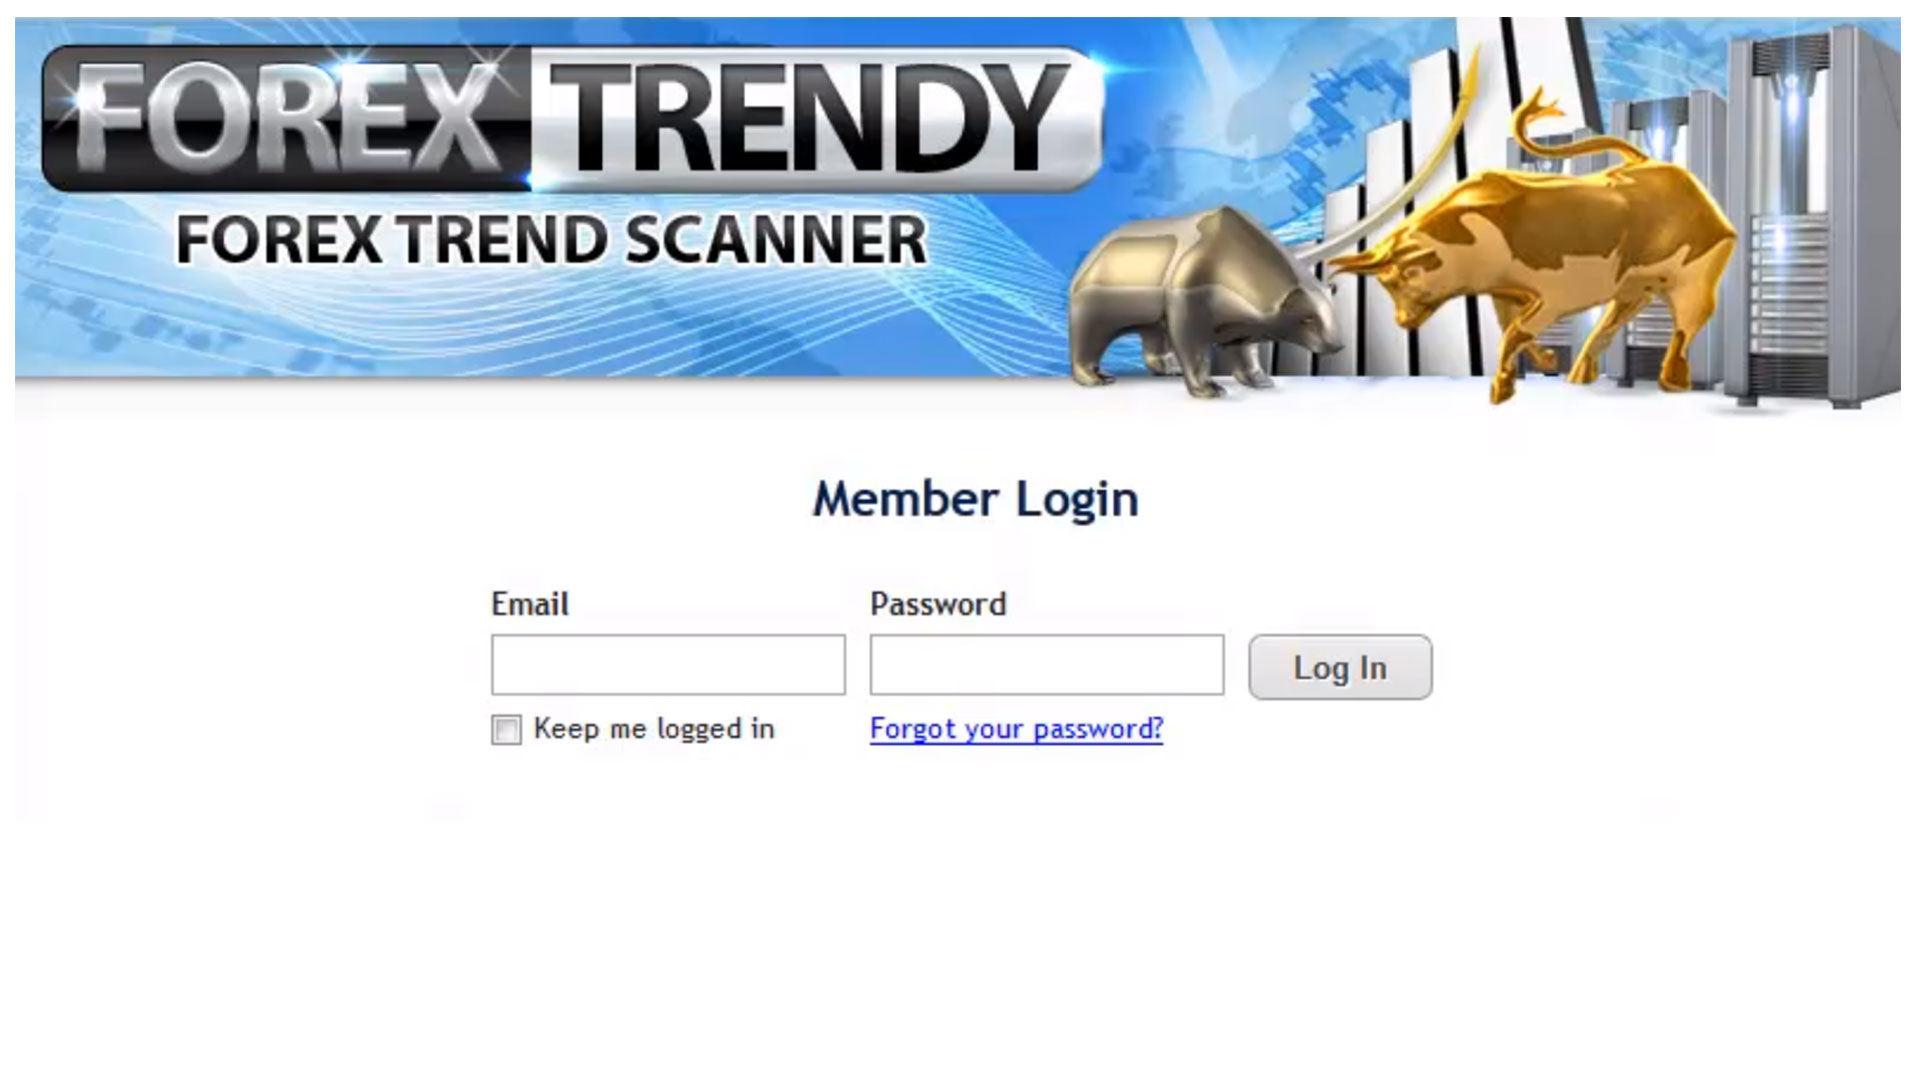 Forex-Trendy-login